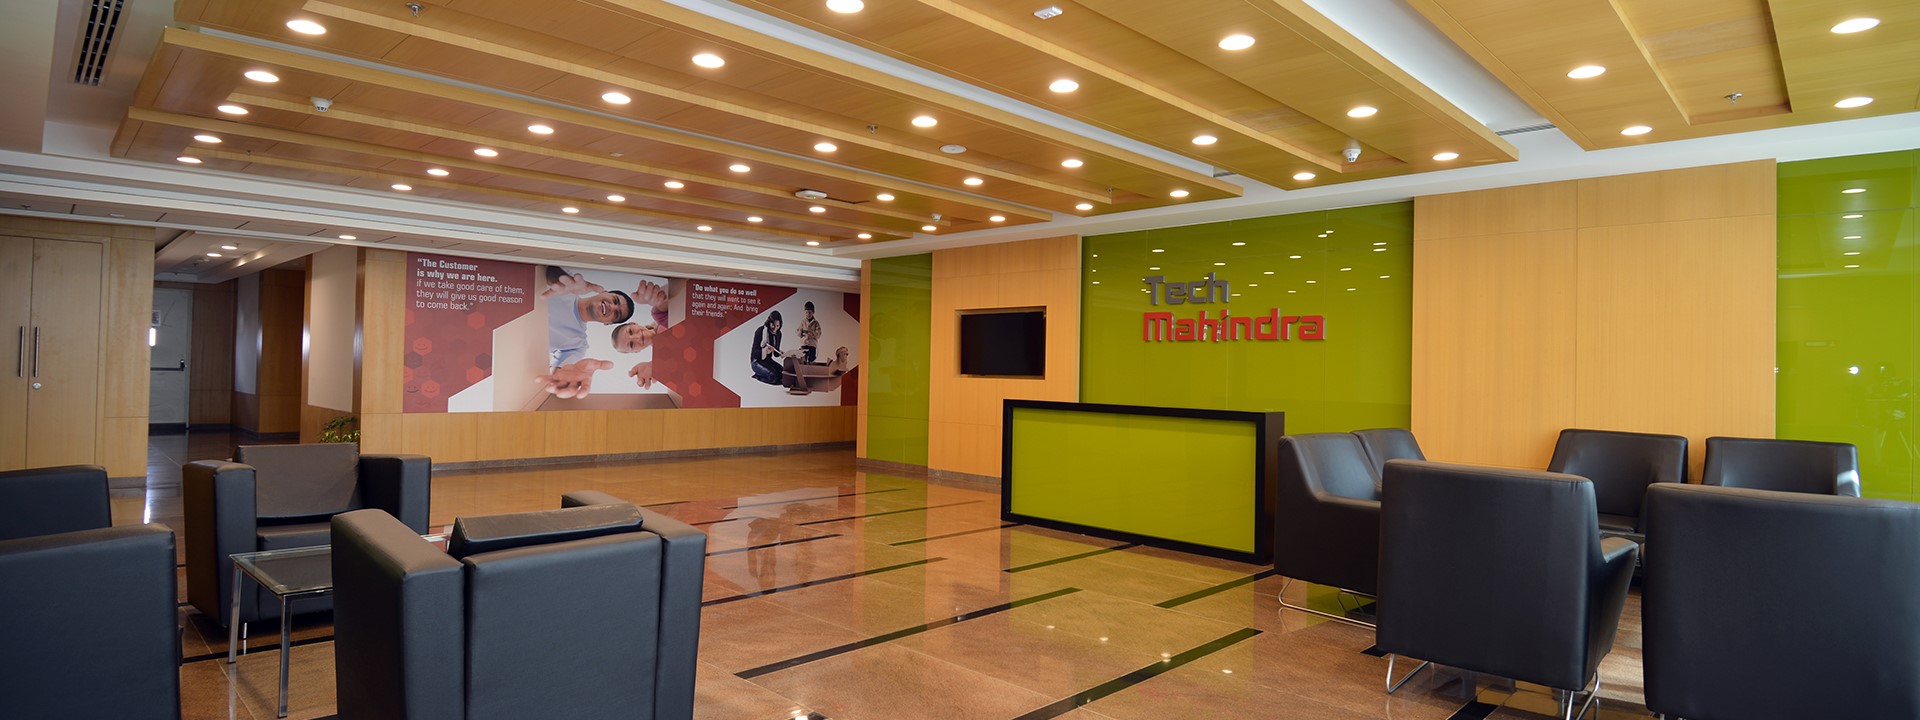 Tech Mahindra in Bengaluru- L&T Construction